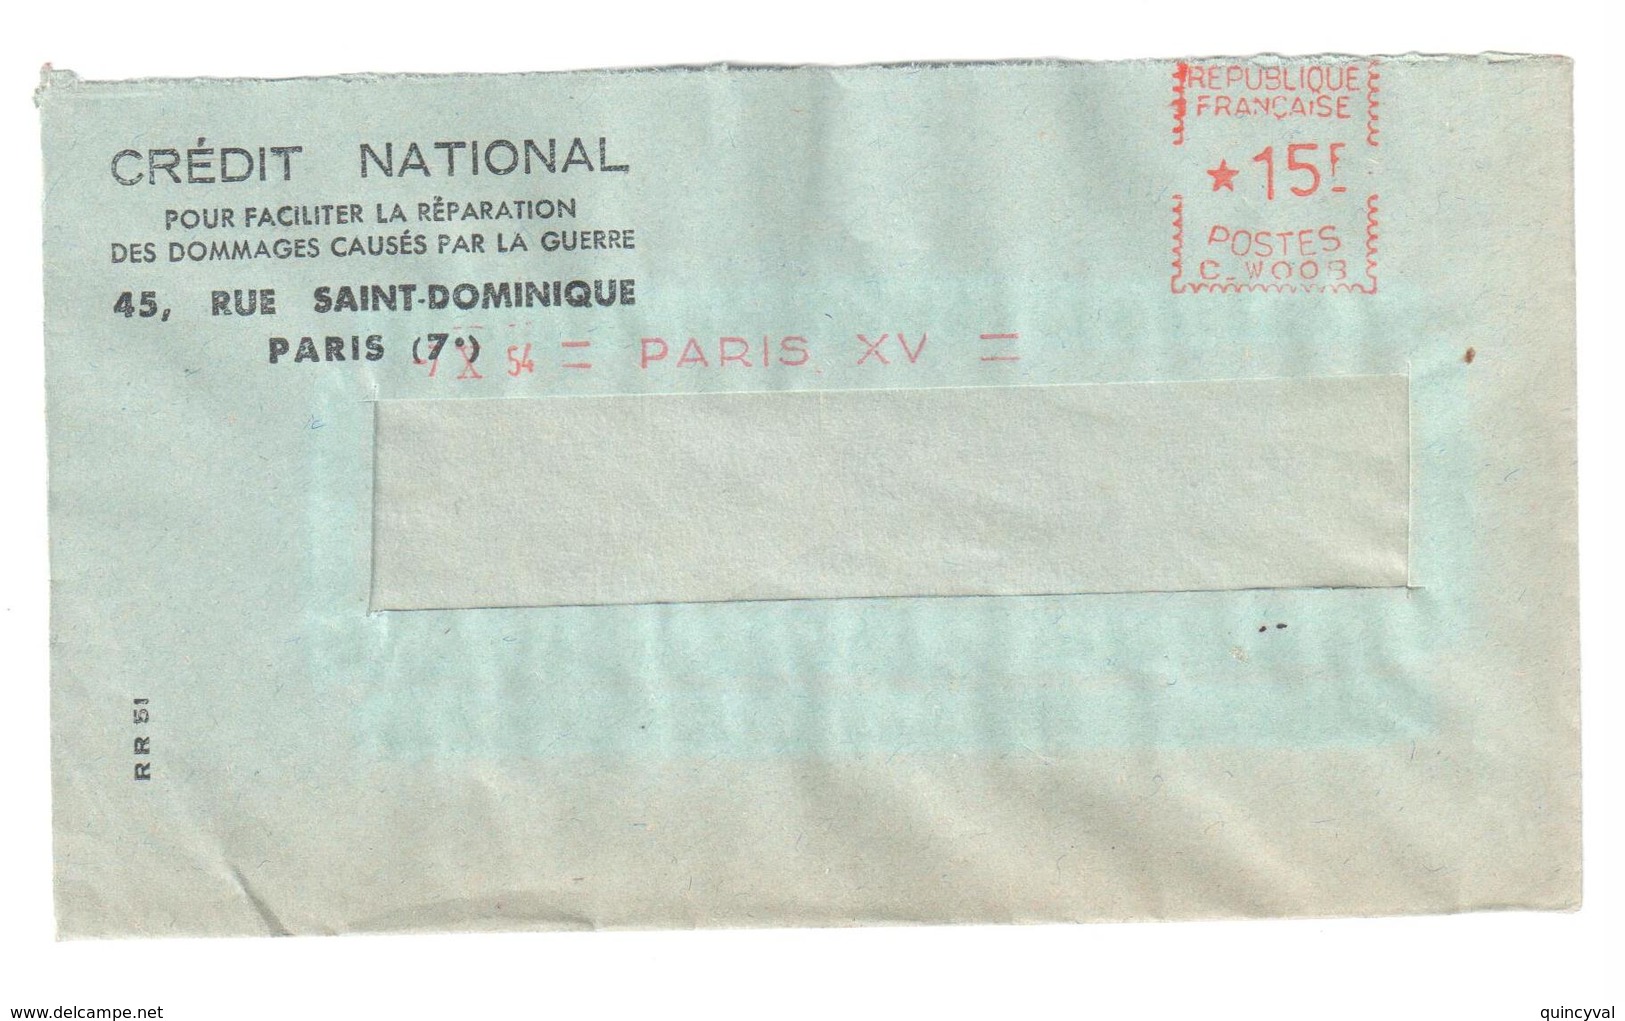 PARIS XV Lettre CREDIT NATIONAL Ob 7 10 1954 Lettre Simple EMA REMPLACEMENT C W 008 15 F - EMA (Printer Machine)